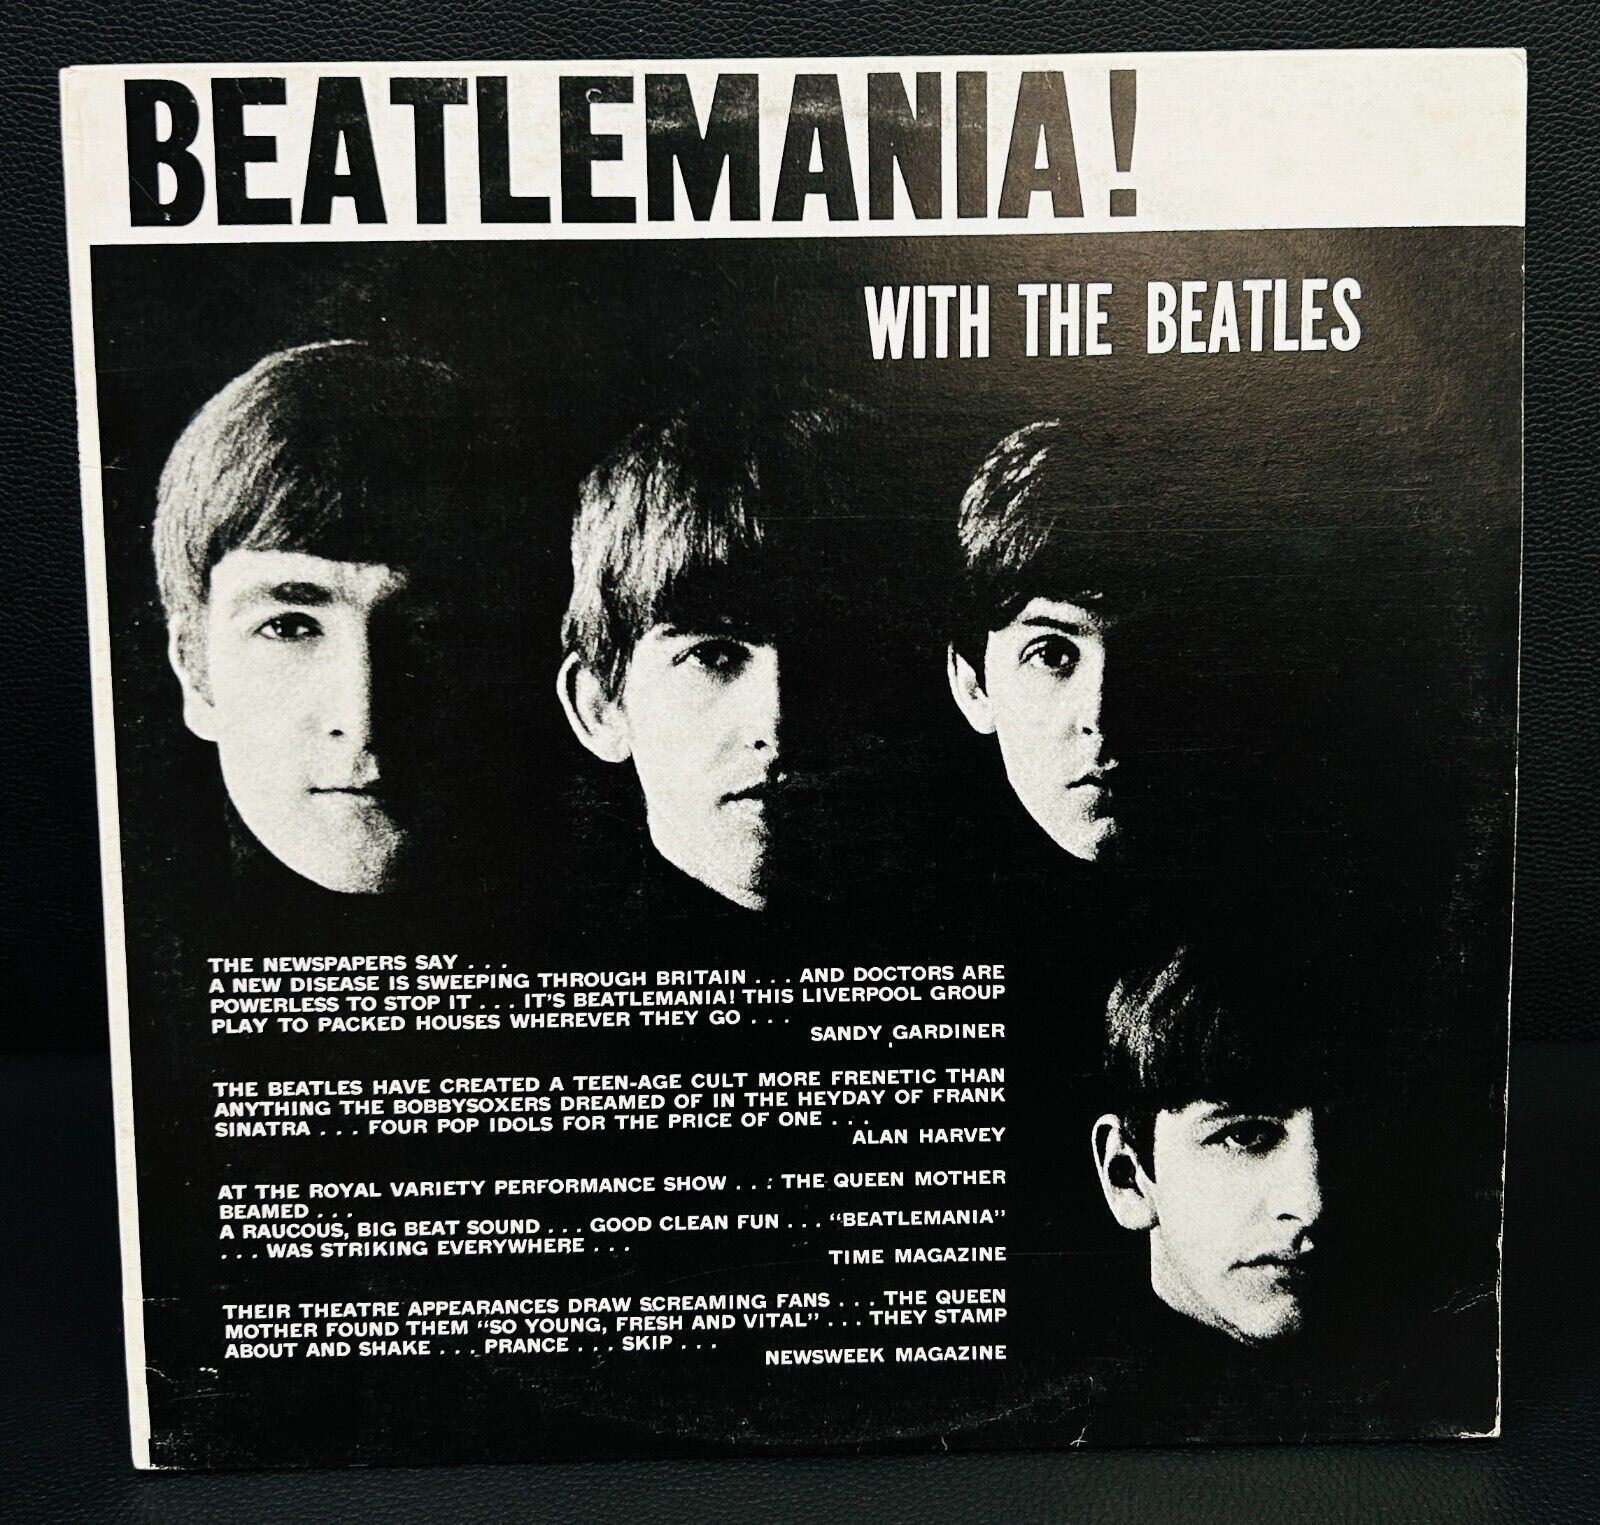 Beatlemania with the Beatles (1xLP Vinyl, ST-6051)